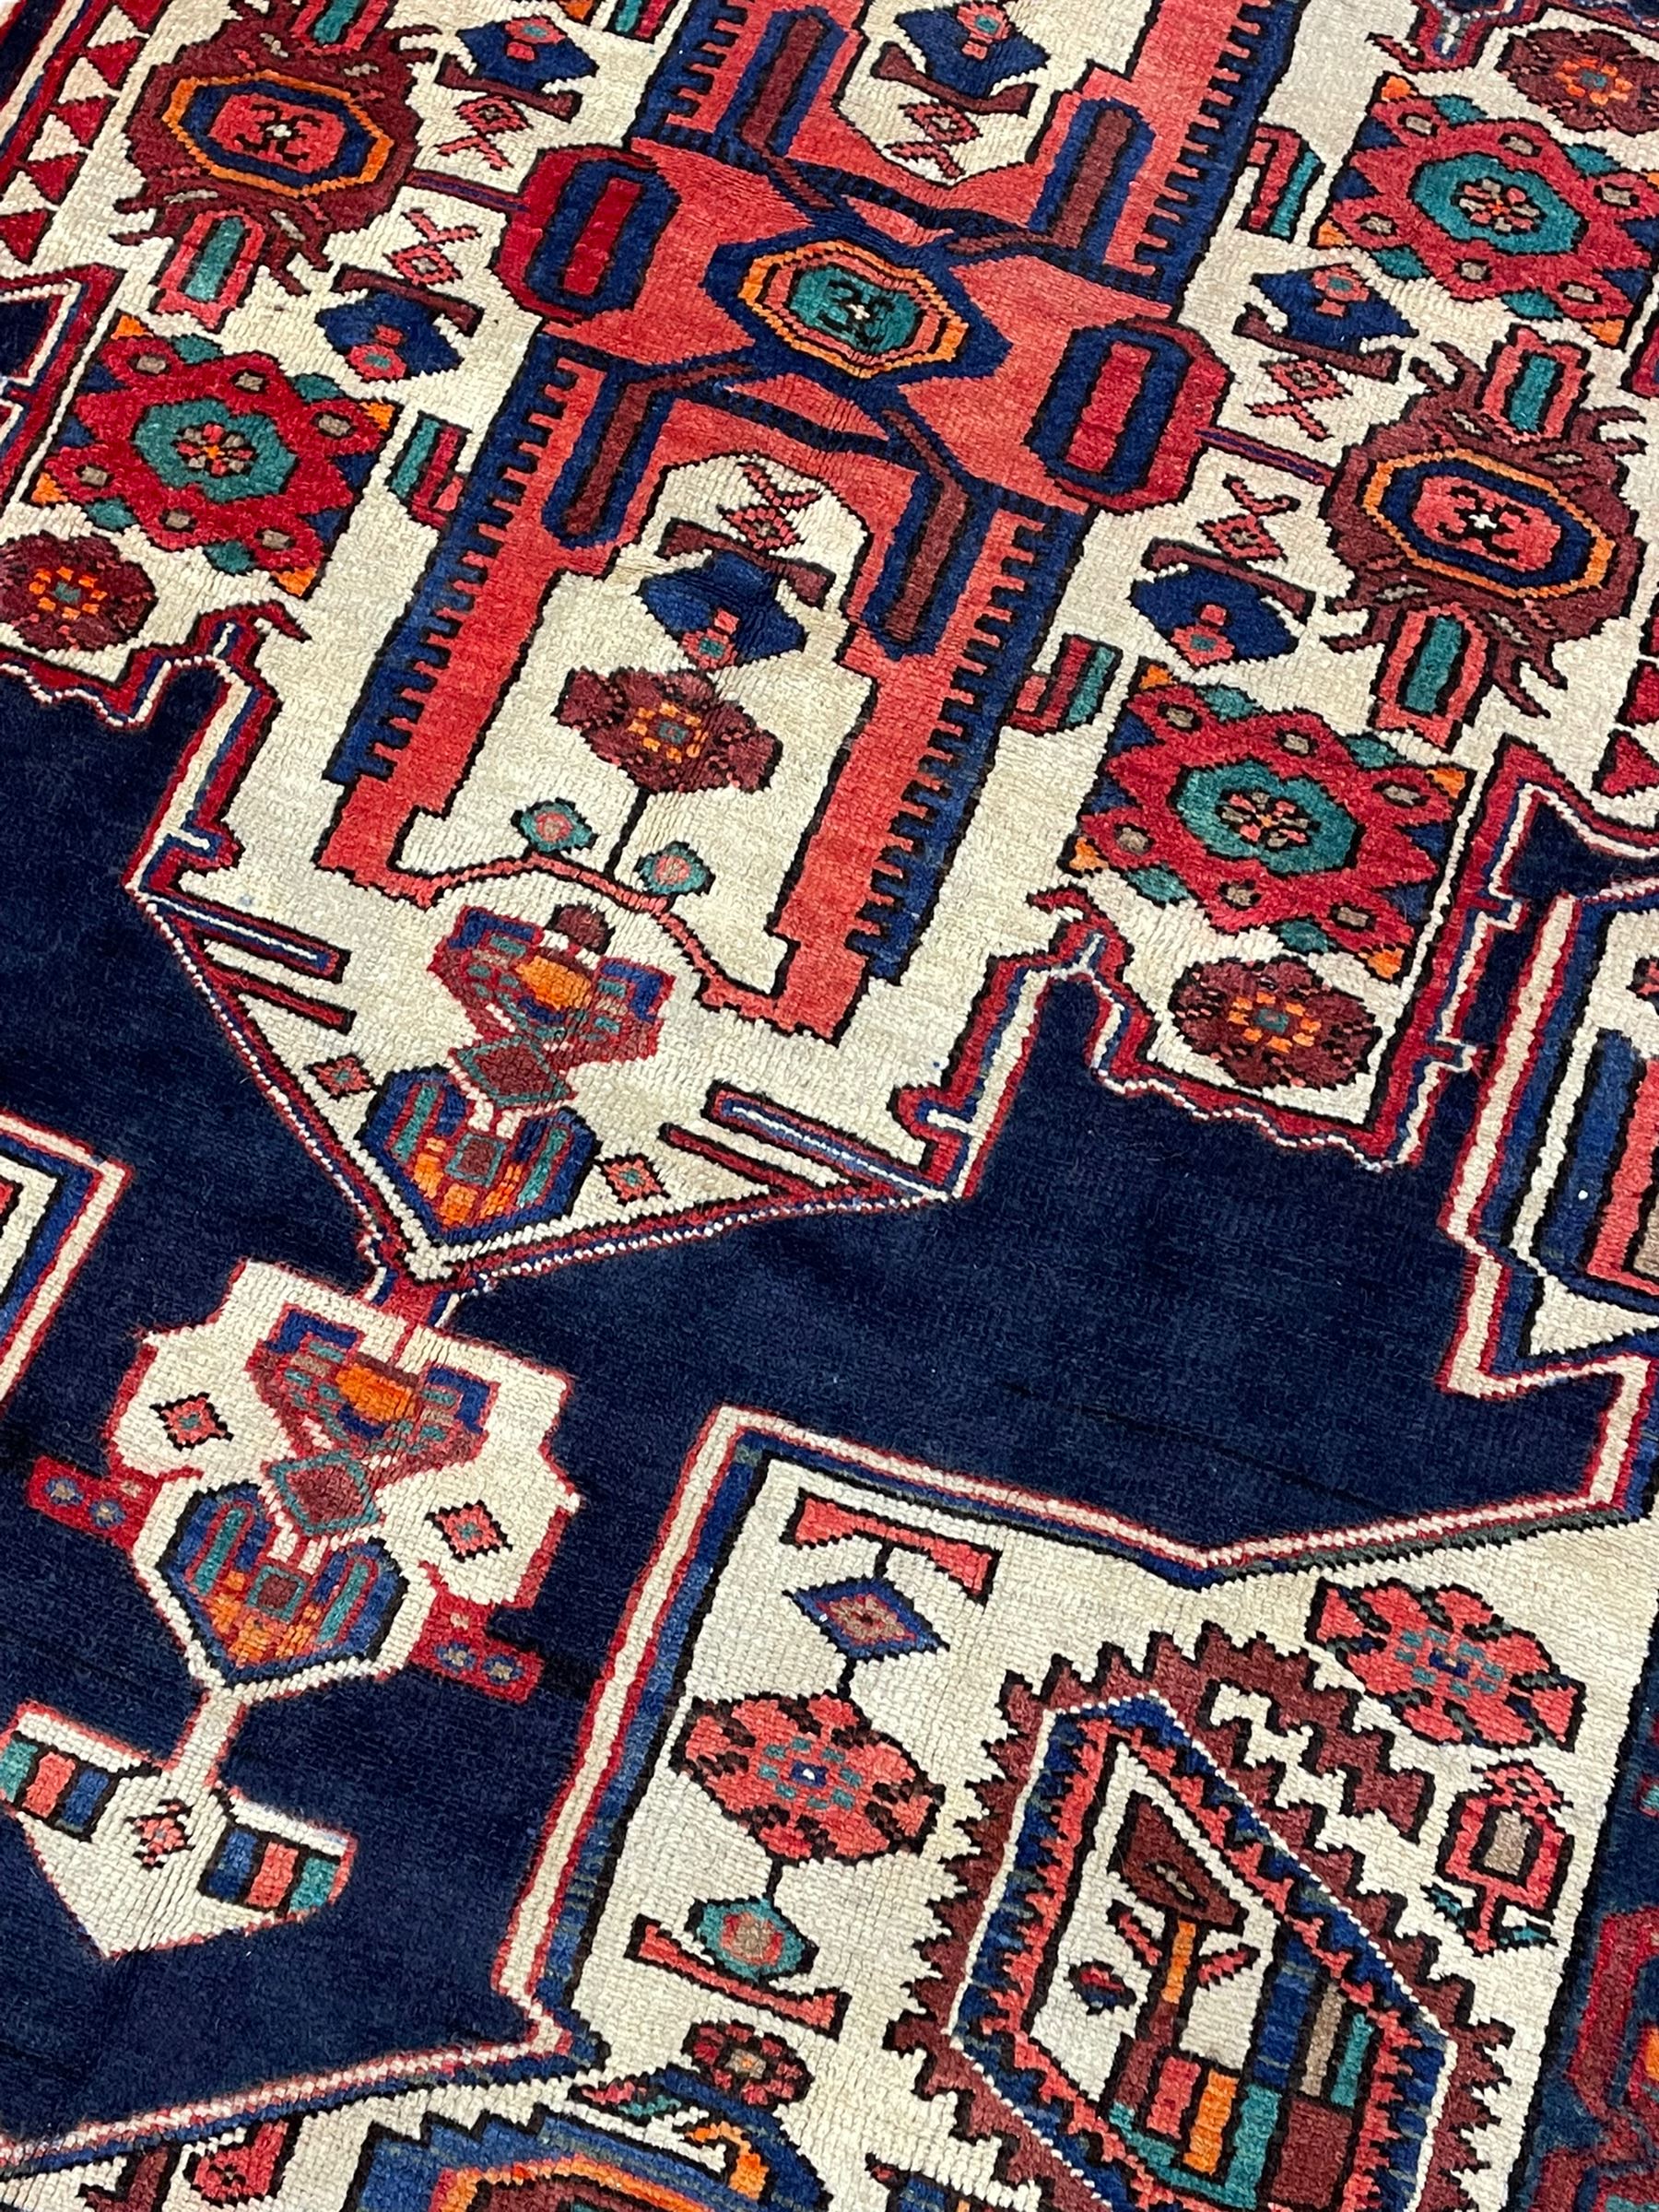 North West Persian Heriz rug - Image 2 of 7